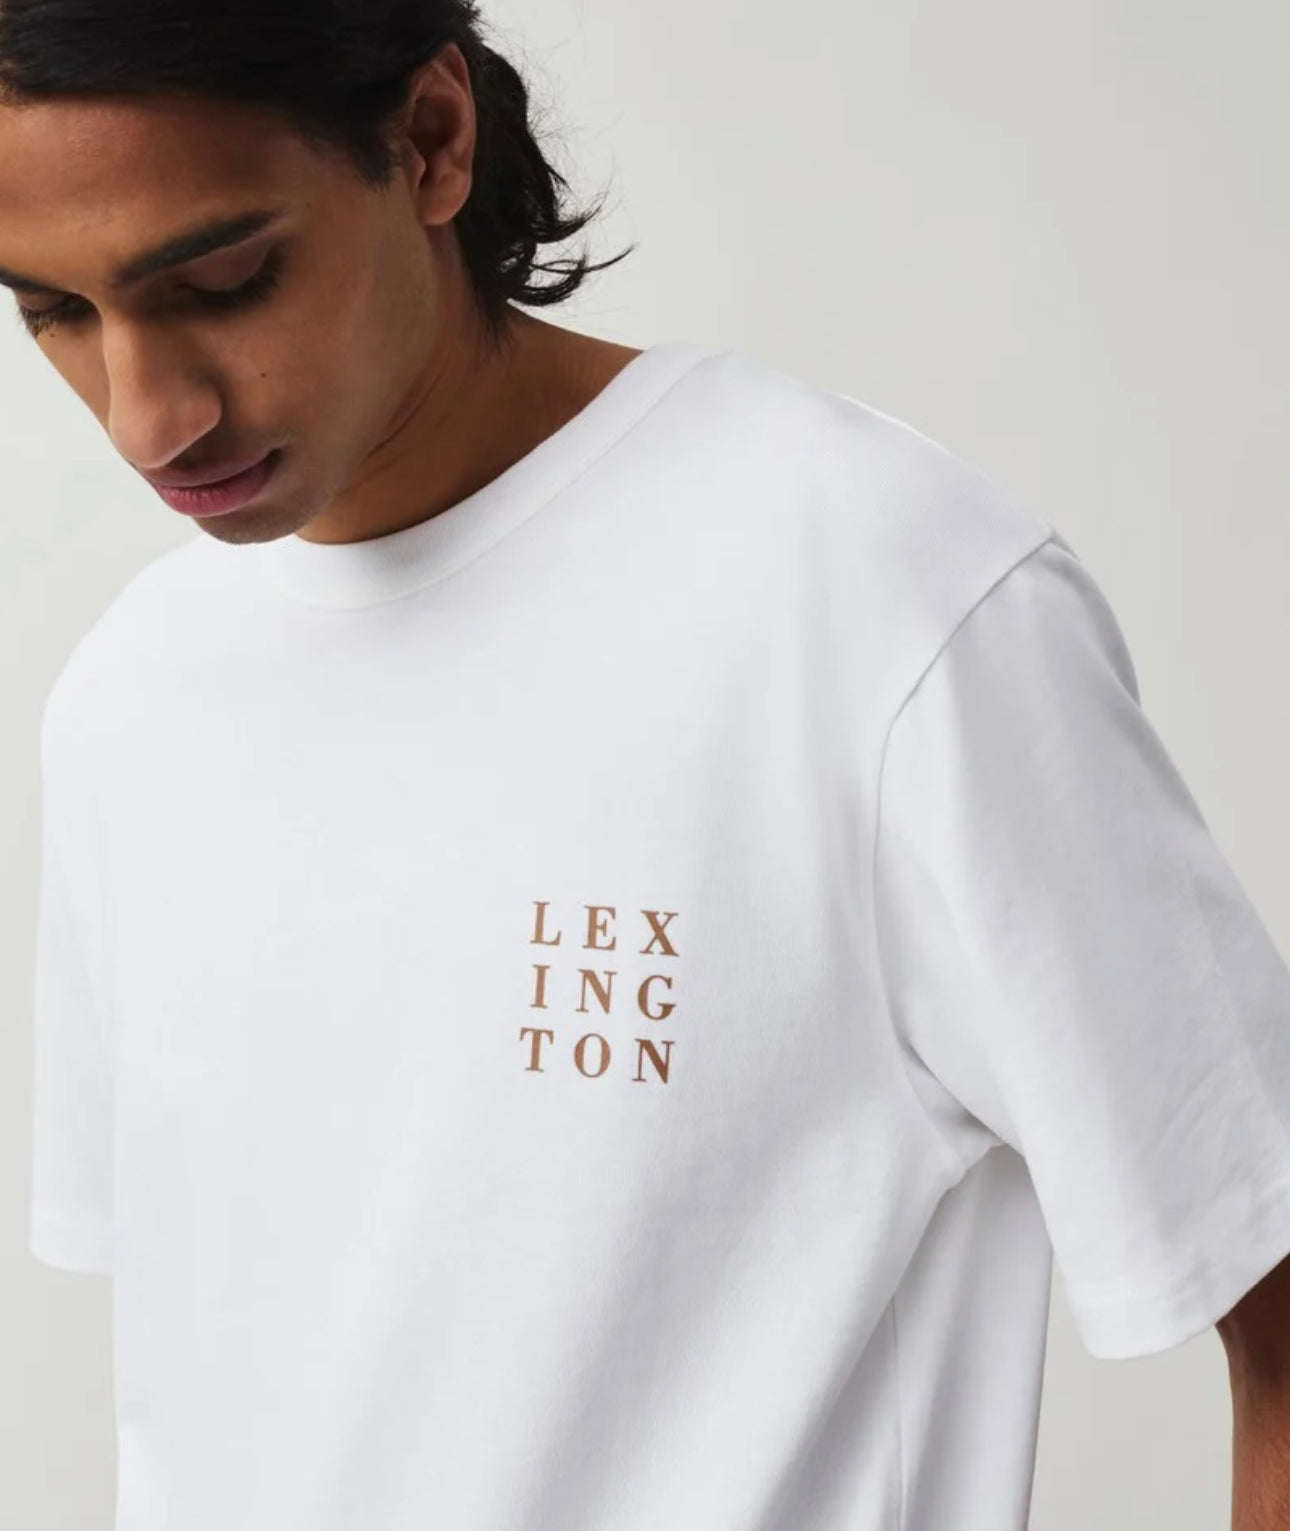 Lexington - t-skjorte, lee heavy tee